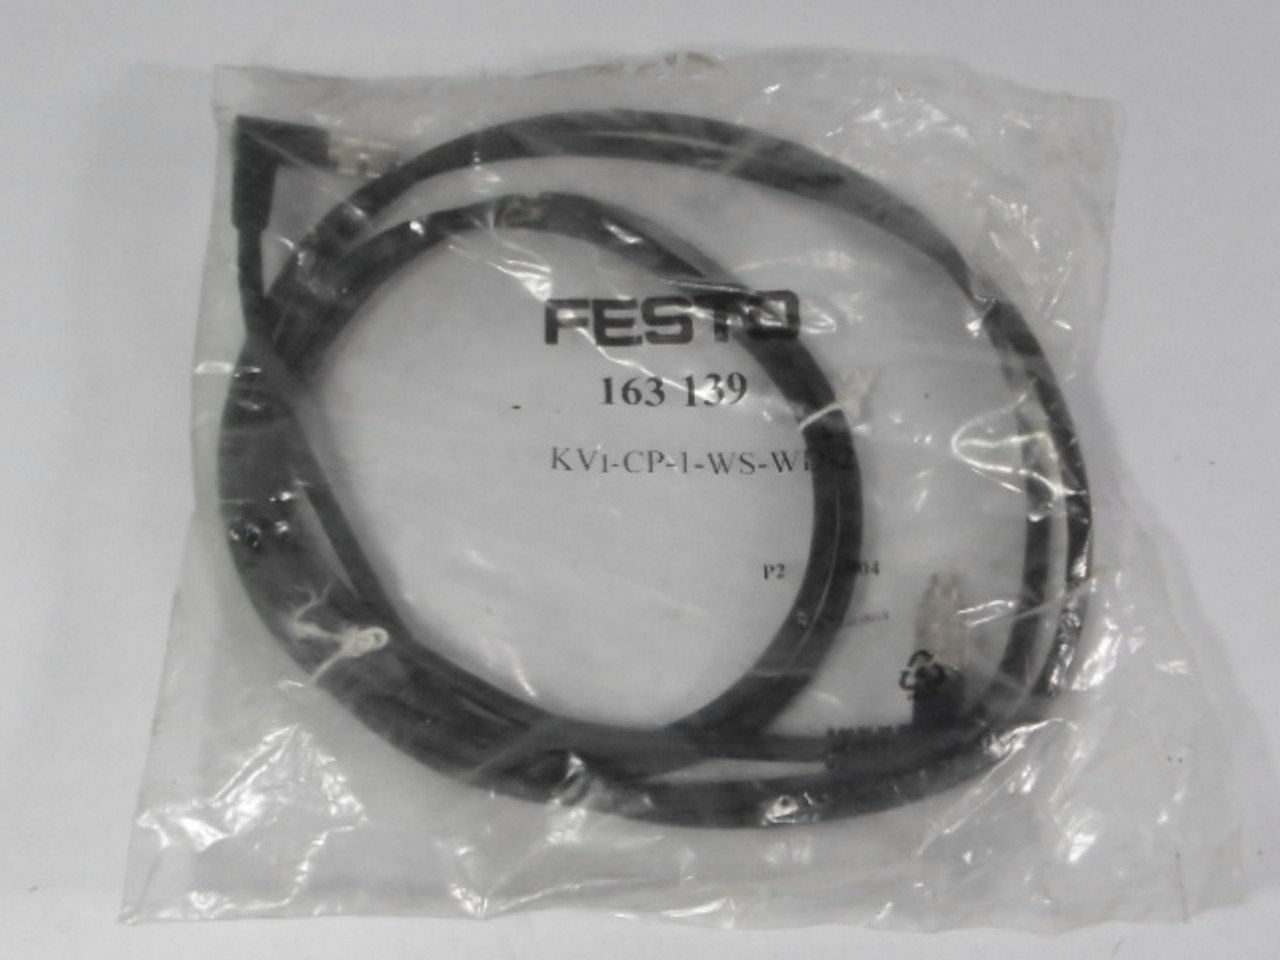 Festo KVI-CP-1-WS-WD-2 Valve Terminal Connecting Cable 2m 163139 ! NWB !